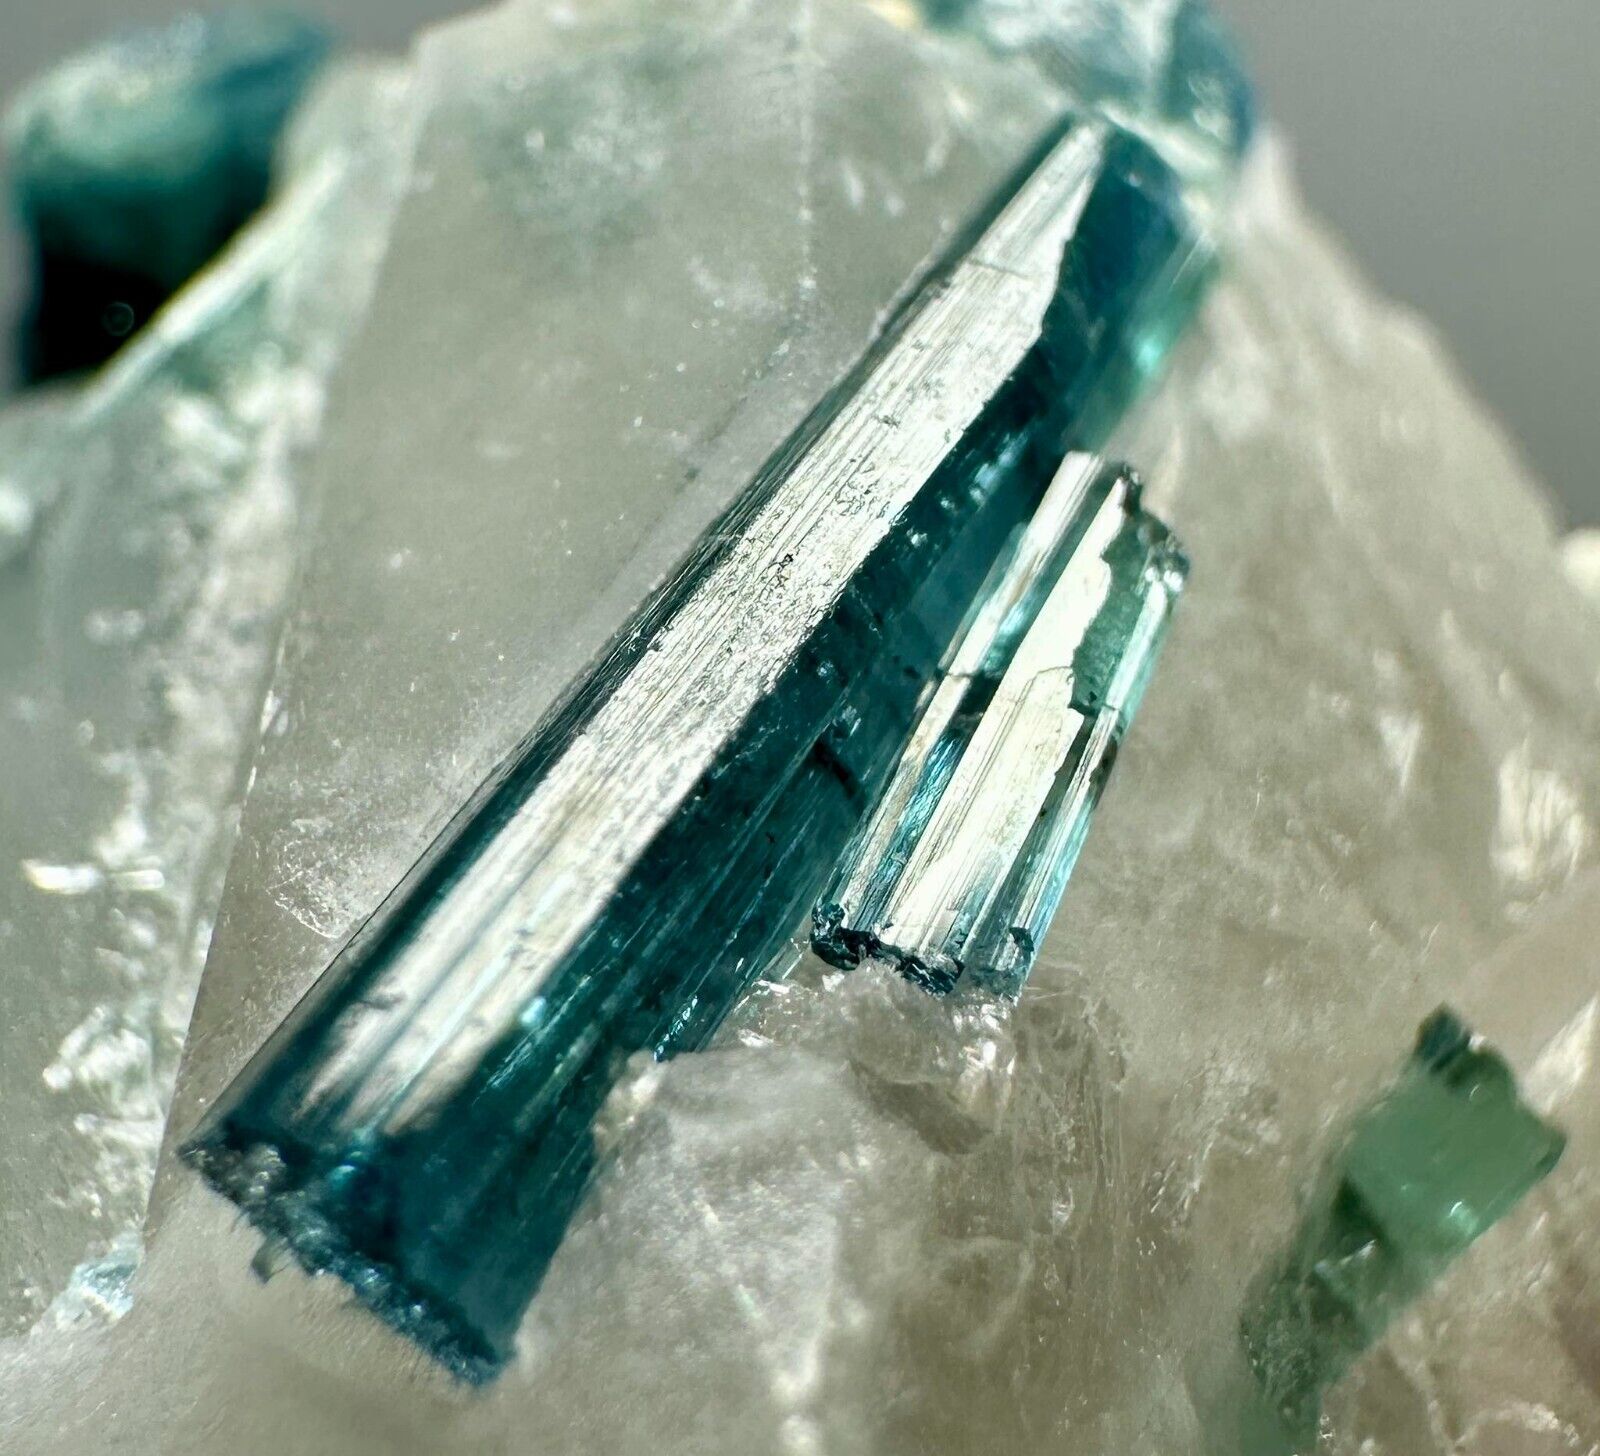 235 Carat Rare Blue Indicolite Tourmaline Crystals On&Inside Quartz Crystal @Afg